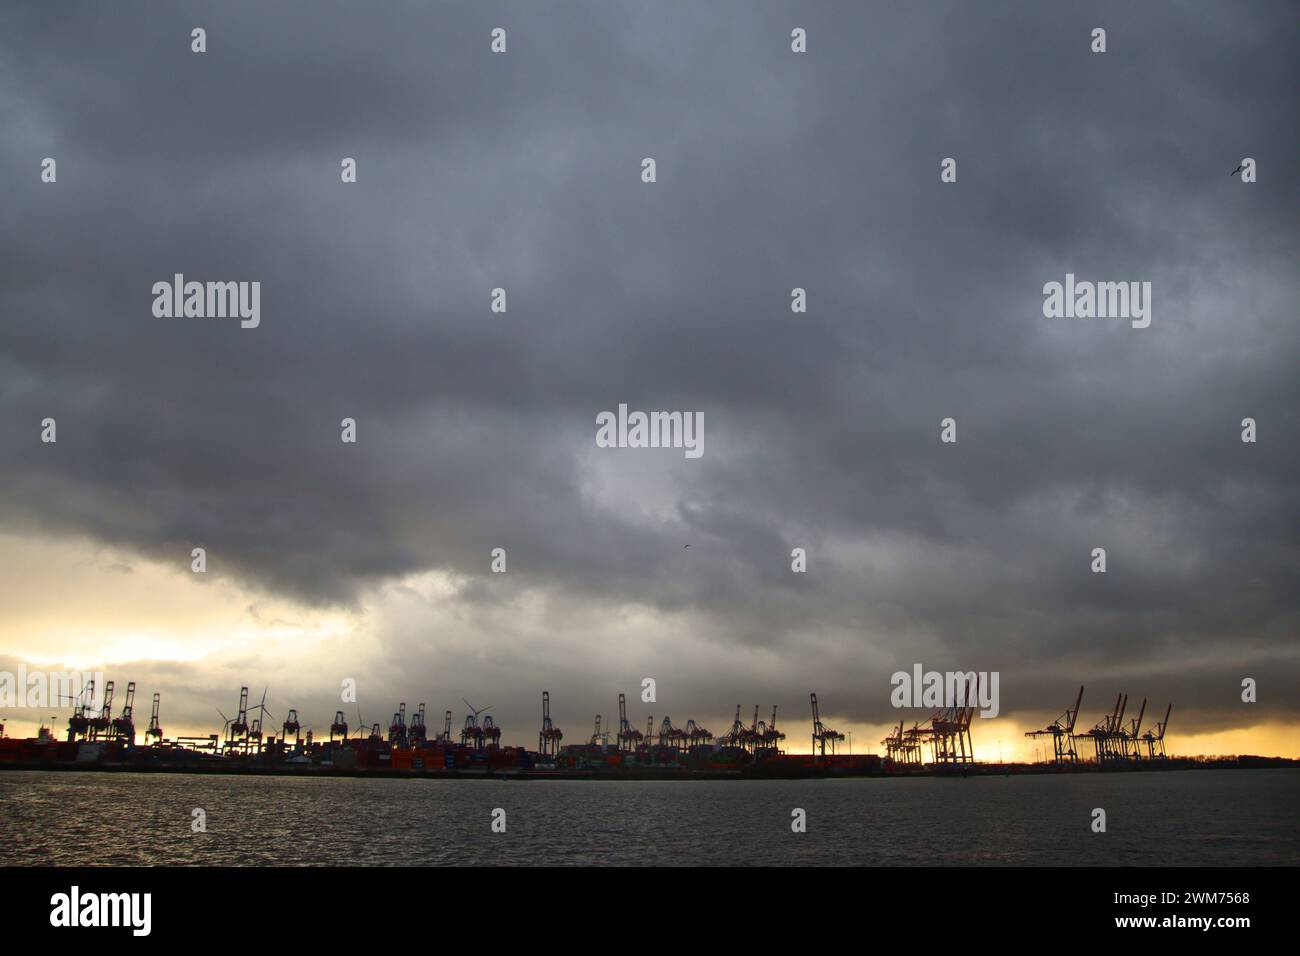 über den Hamburger Hafen zieht eine große und dunkle Wolkenbank. *** Une grande et sombre banque de nuages passe au-dessus du port de Hambourg Banque D'Images